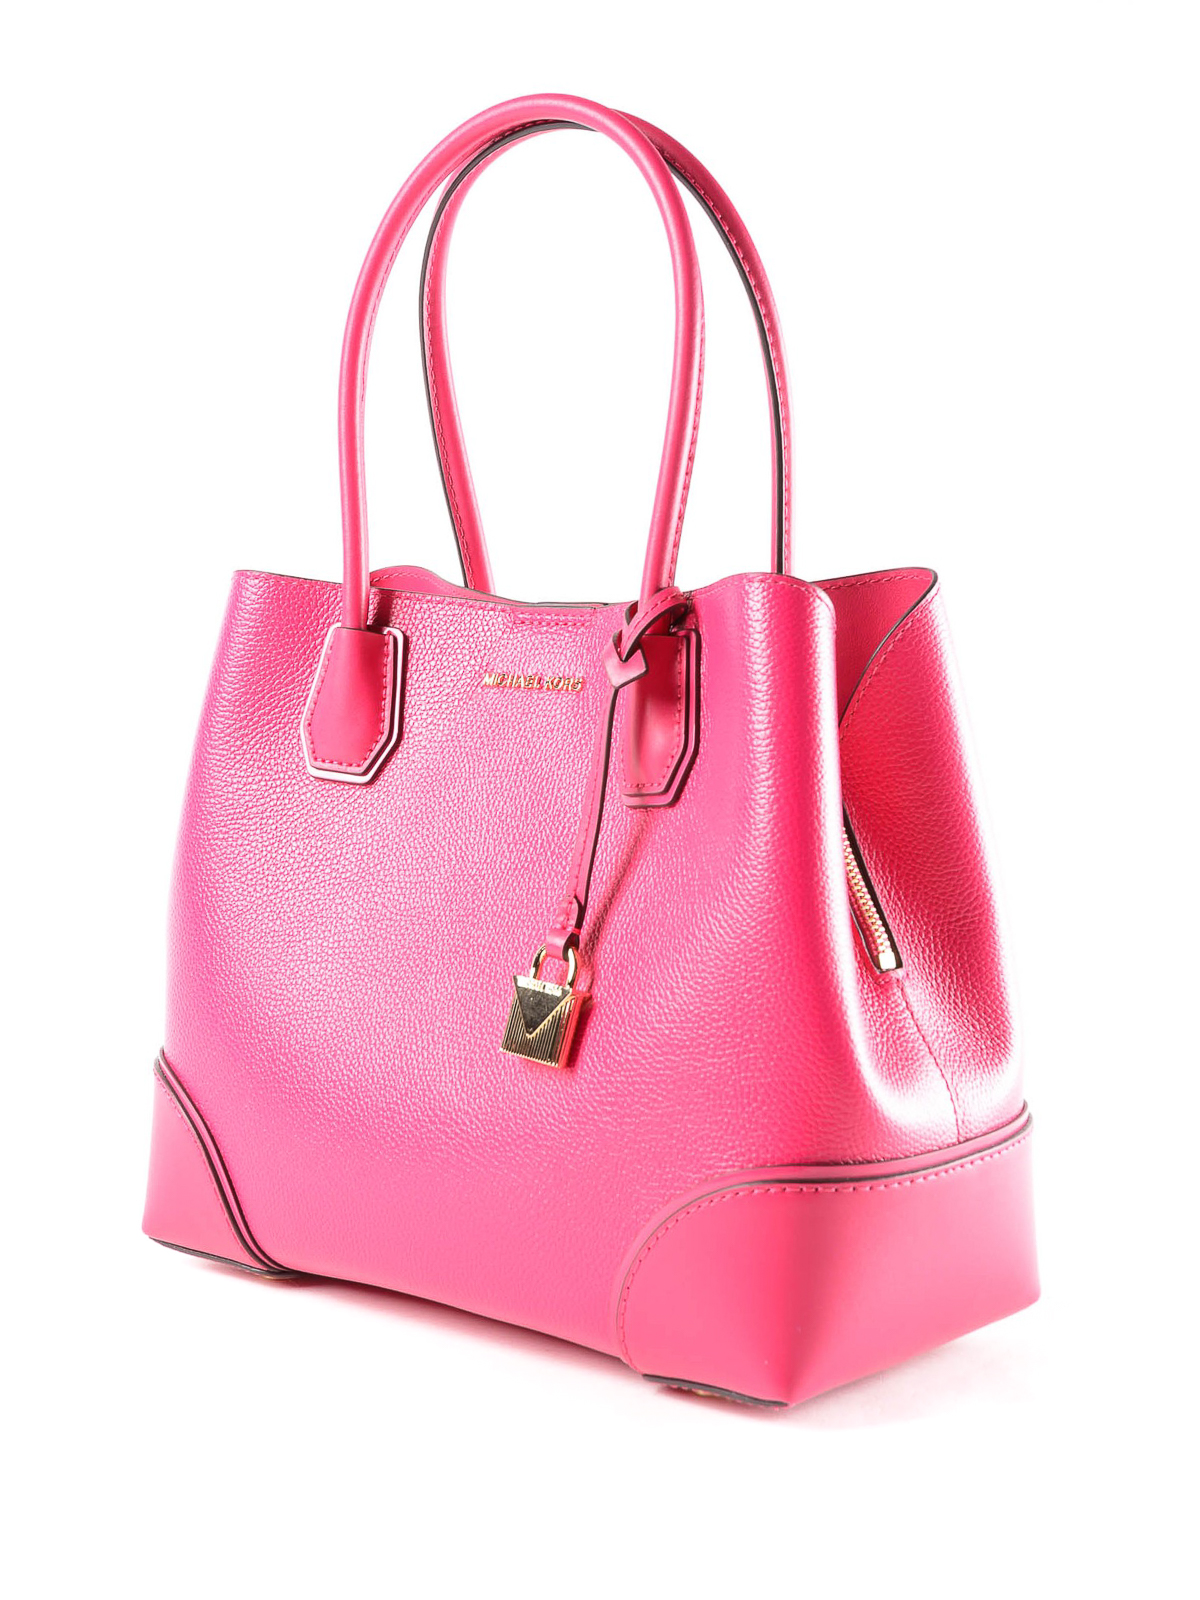 Totes bags Michael Kors - Mercer Gallery M ultra pink bag - 30H7GZ5T6A564